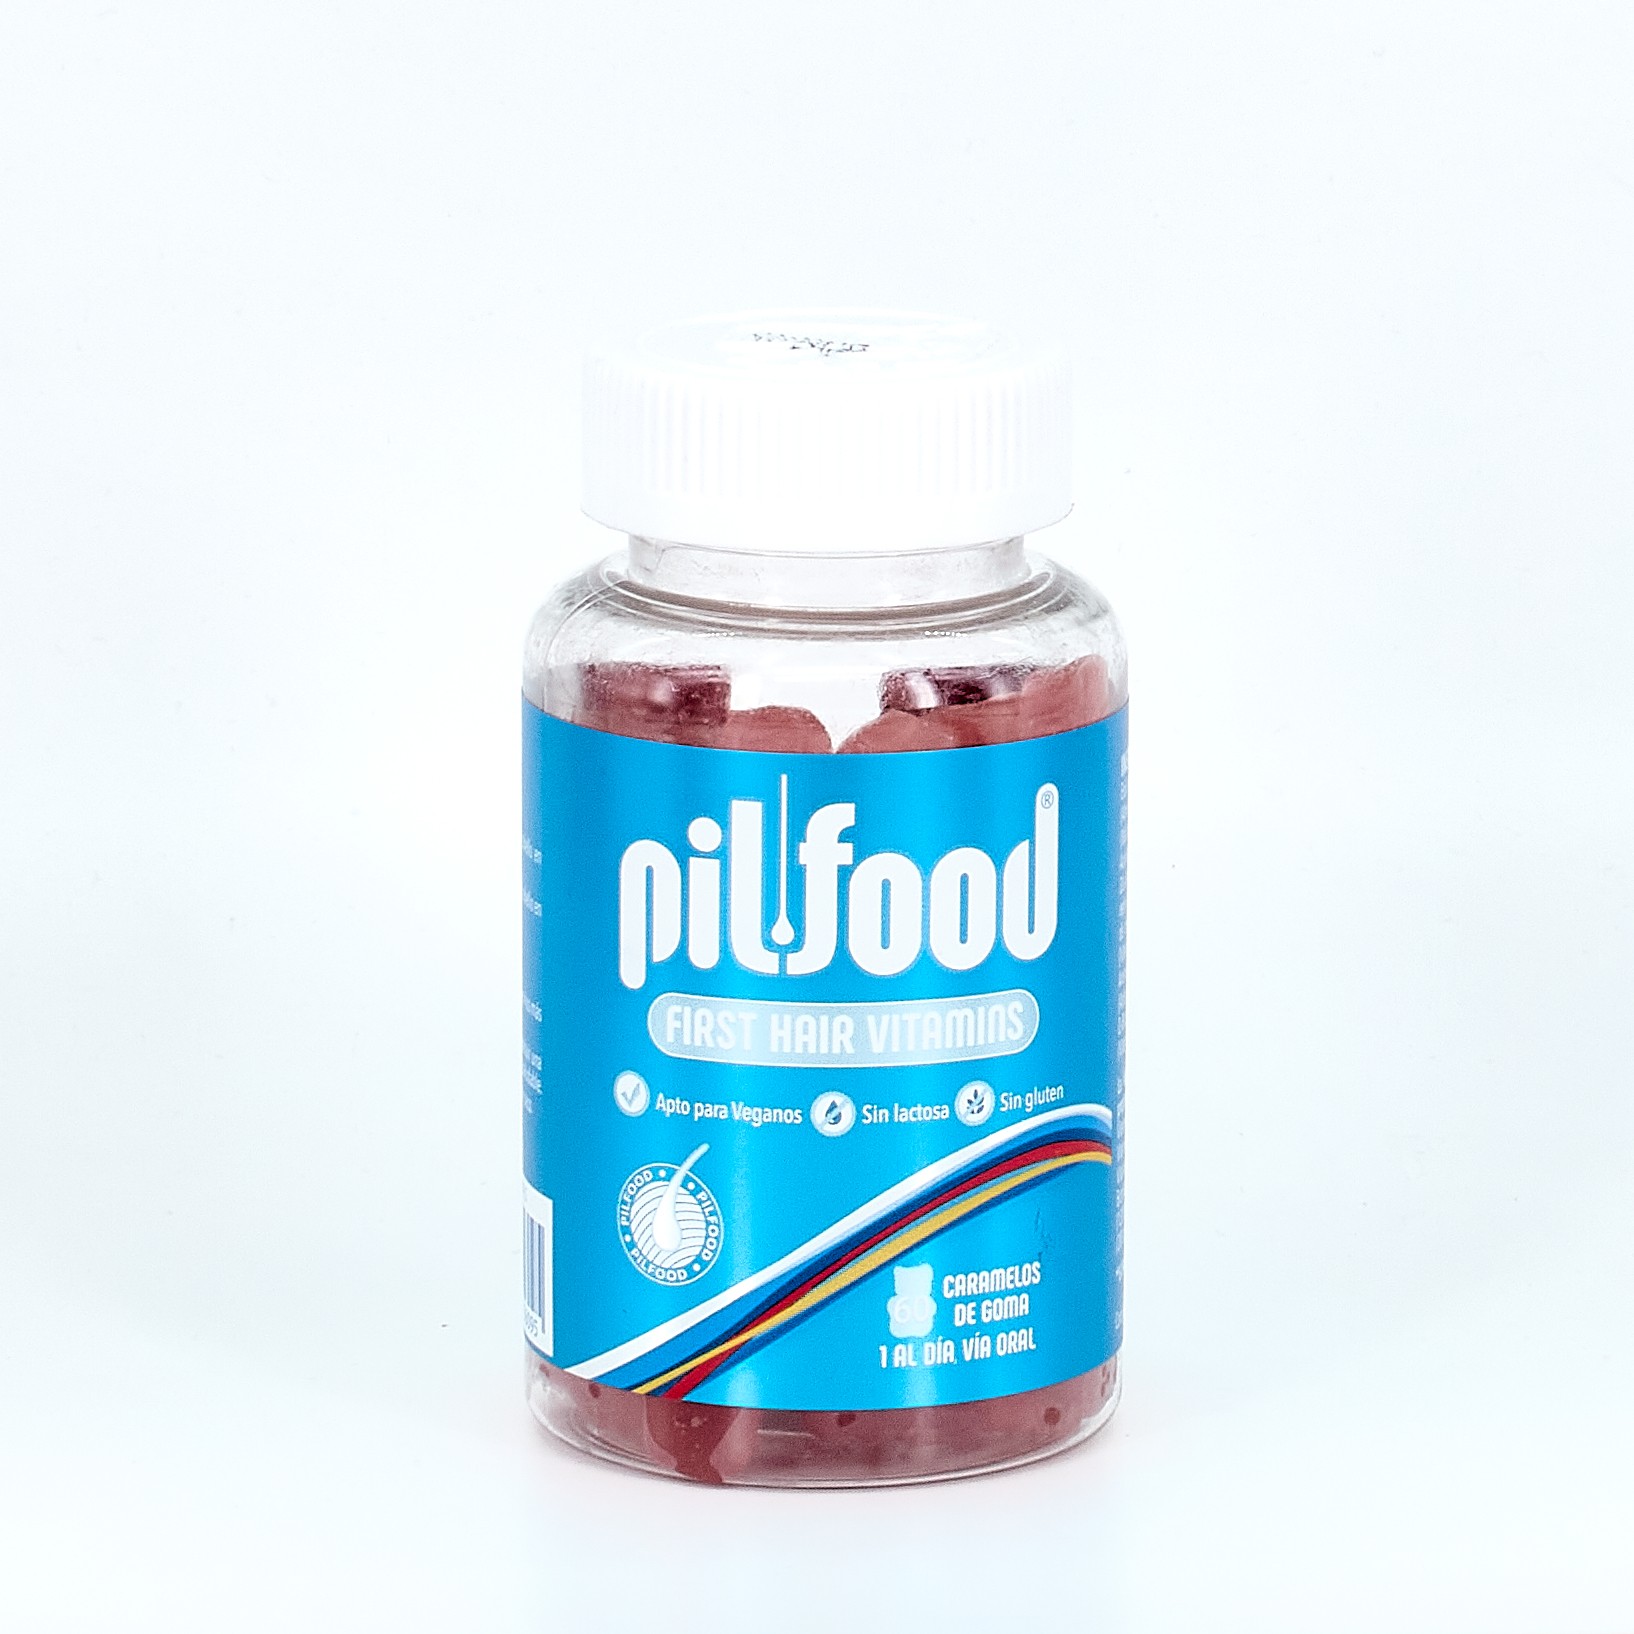 Pilfood First Hair Vitaminas, 60 Caramelos de goma.